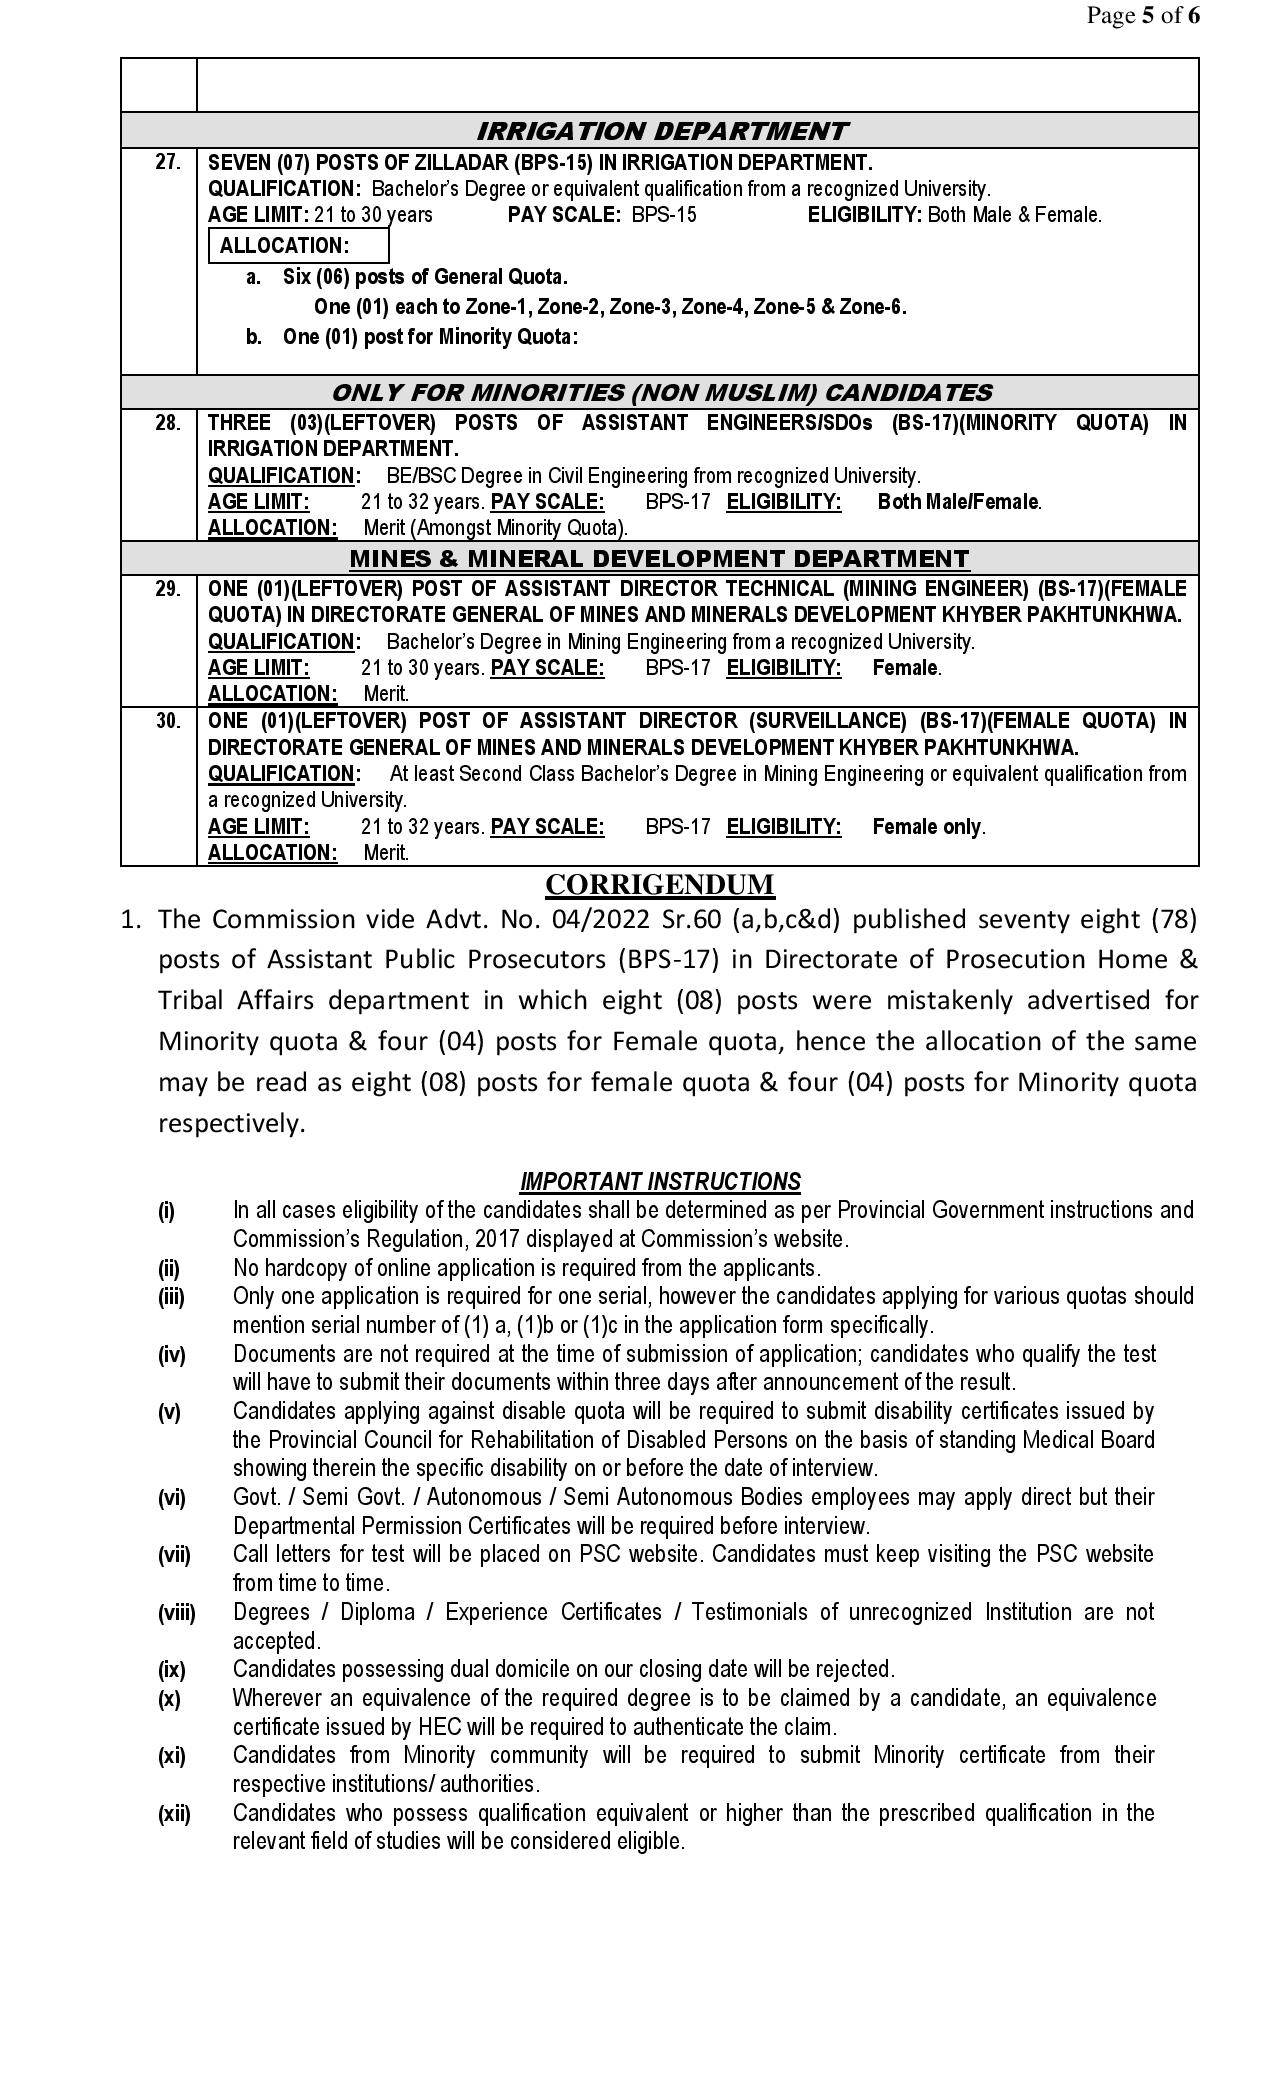 Khyber Pakhtunkhwa Public Service Commission KPPSC Jobs 2023 Latest Advertisement